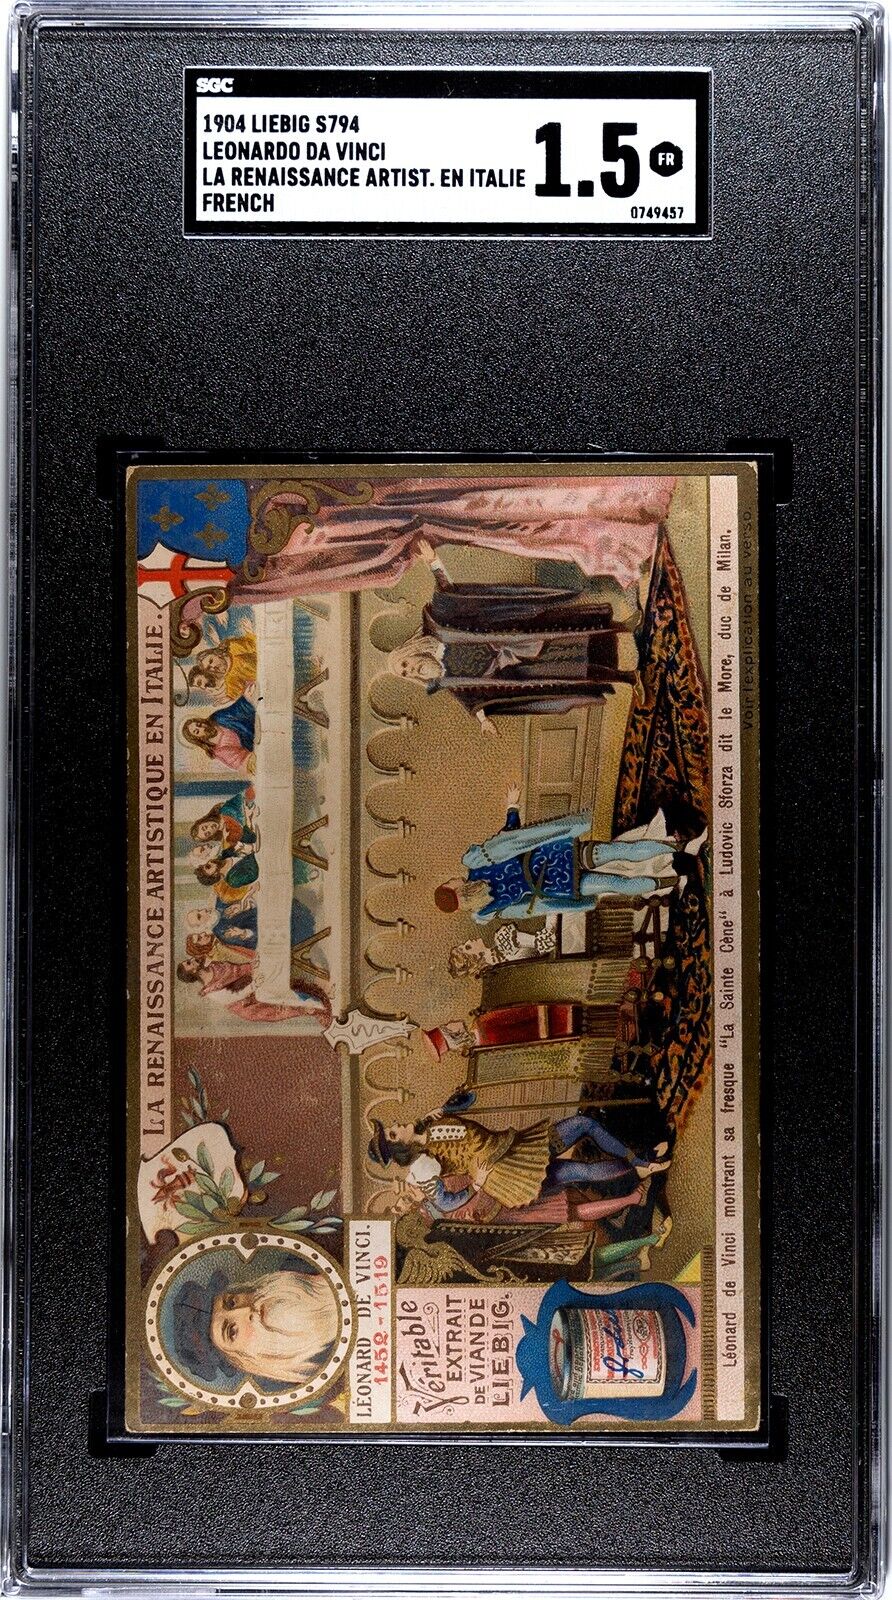 Leonardo Da Vinci 1904 Liebig Trading Card Vintage Painter SGC 1.5